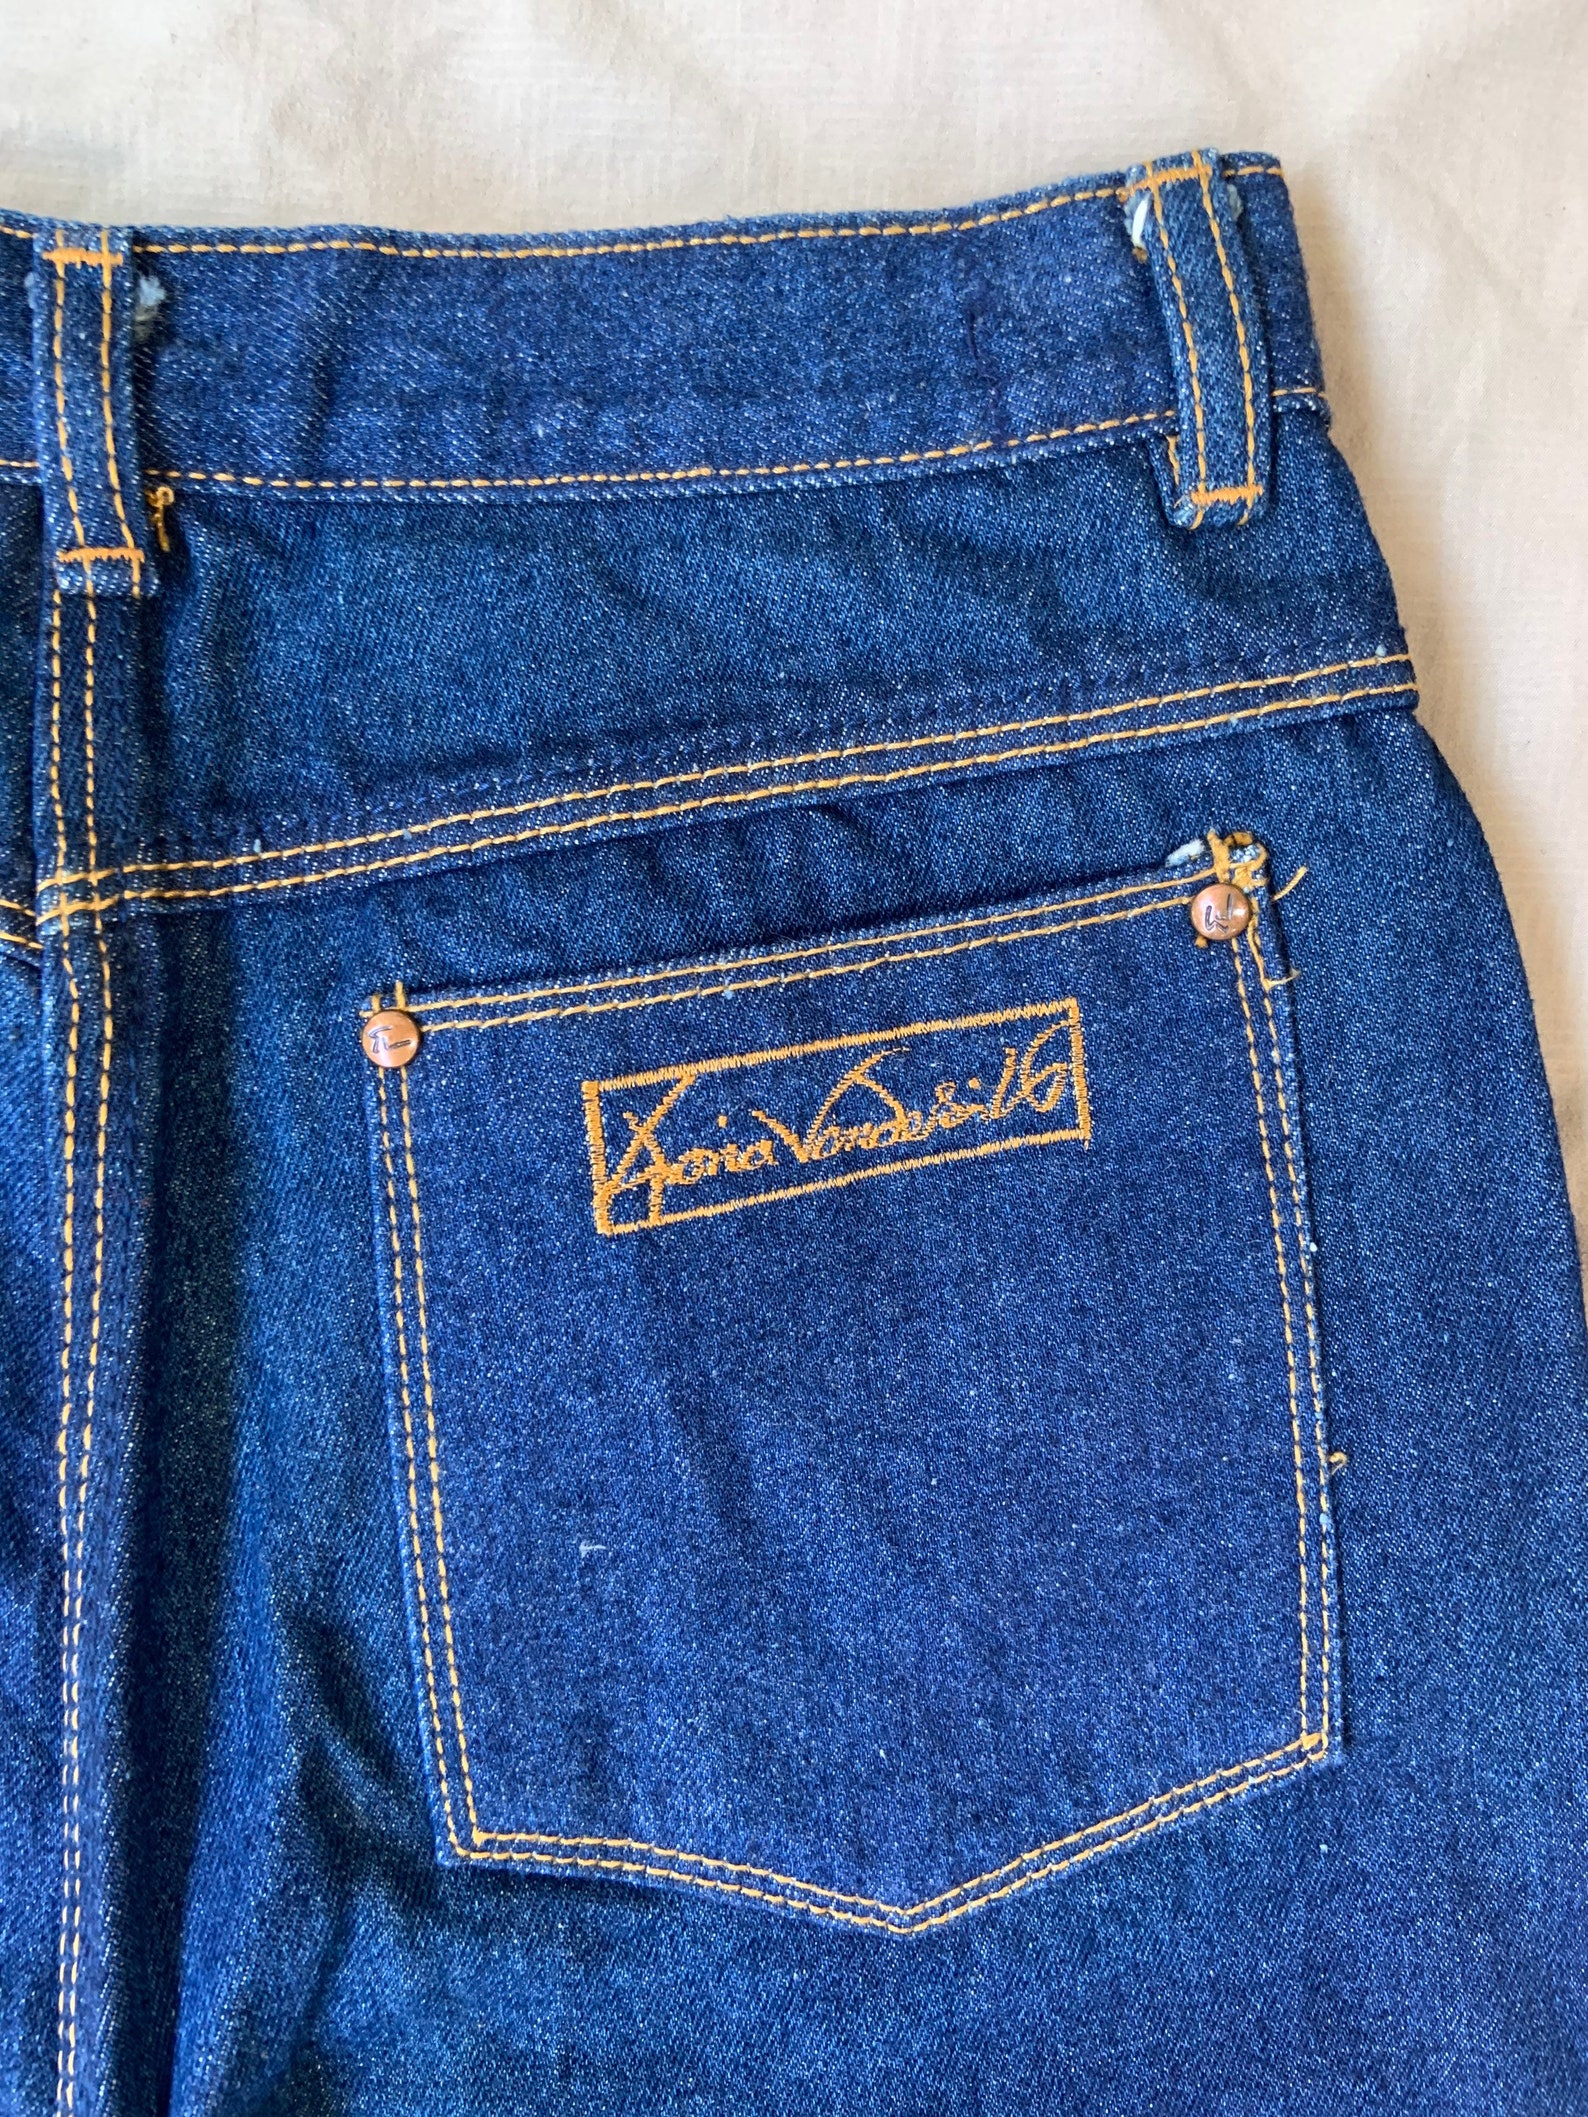 1980s Gloria Vanderbilt High Waist Jeans | Etsy